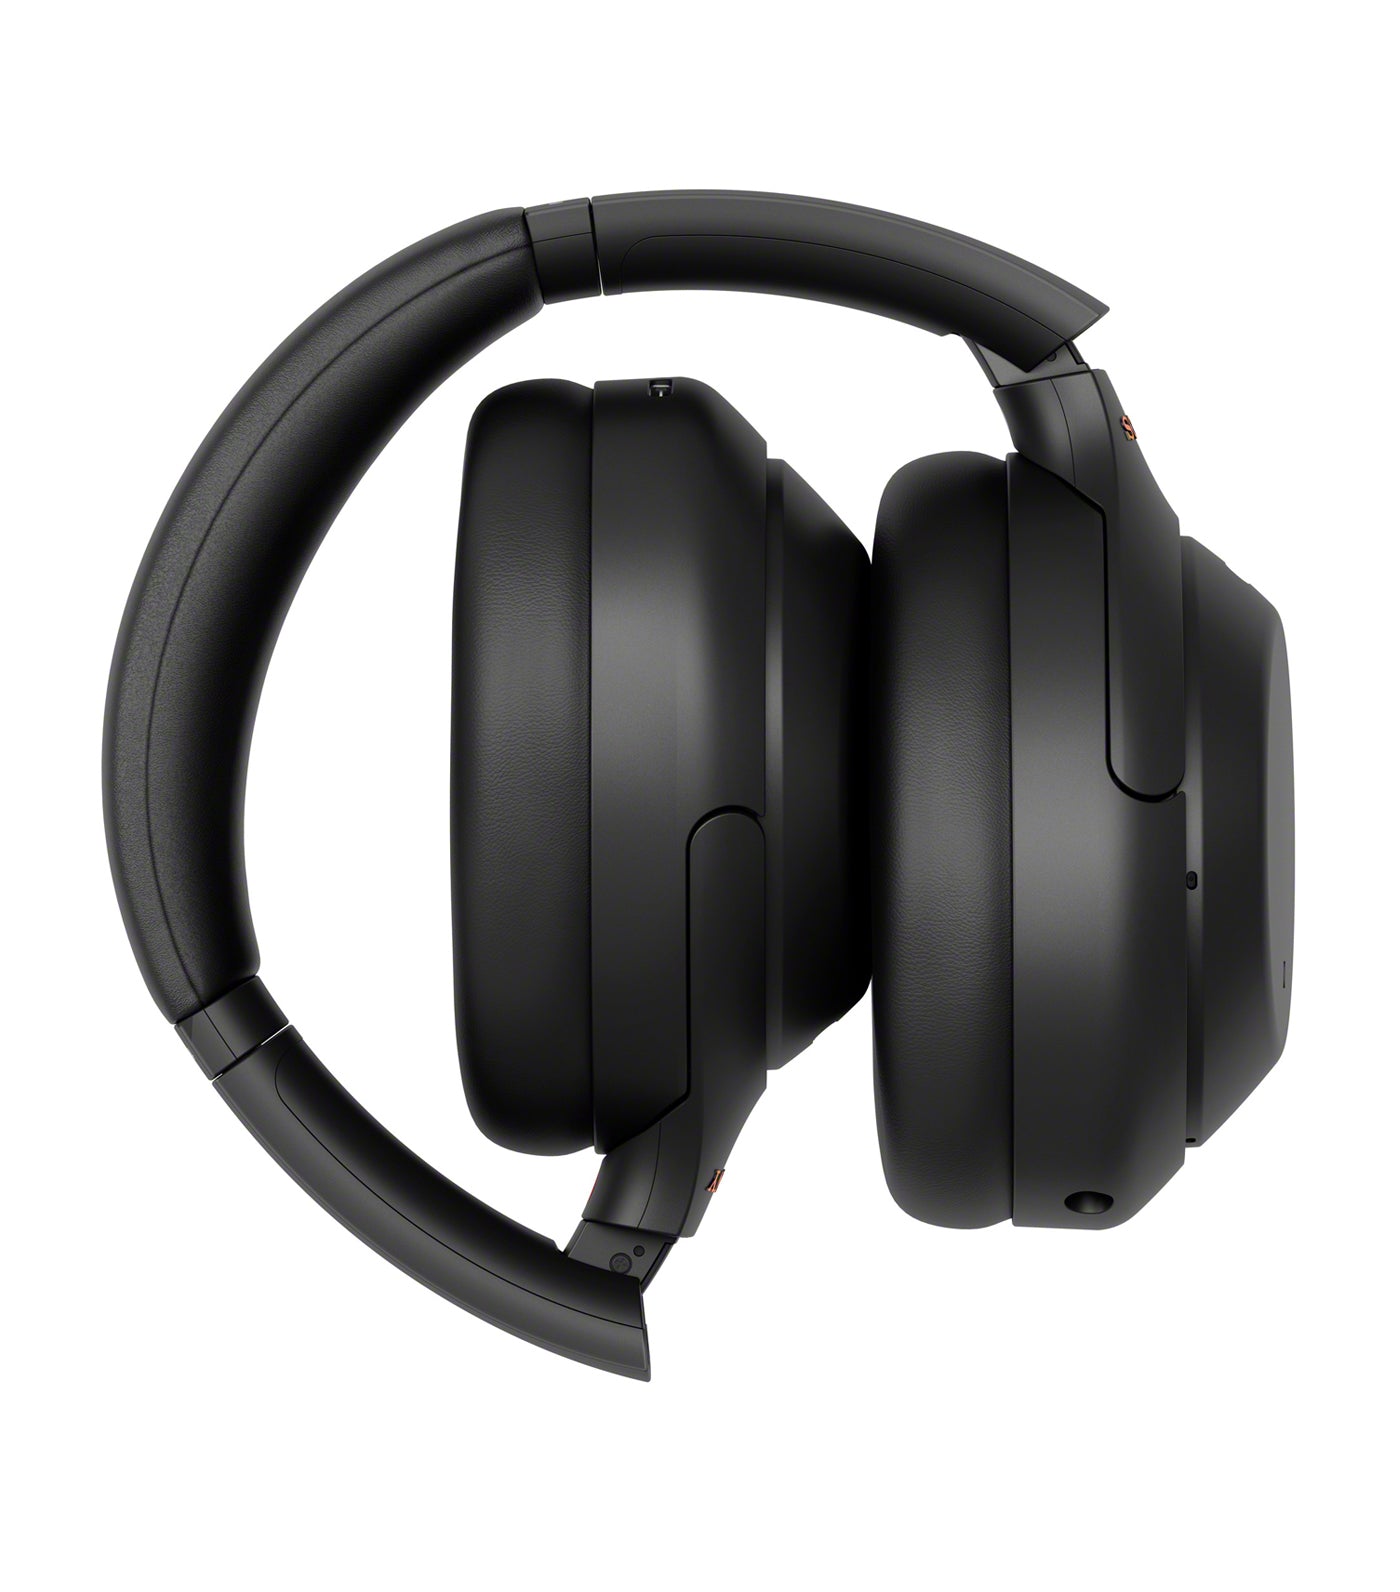 WH-1000XM4 Wireless Noise-Canceling Headphones Black